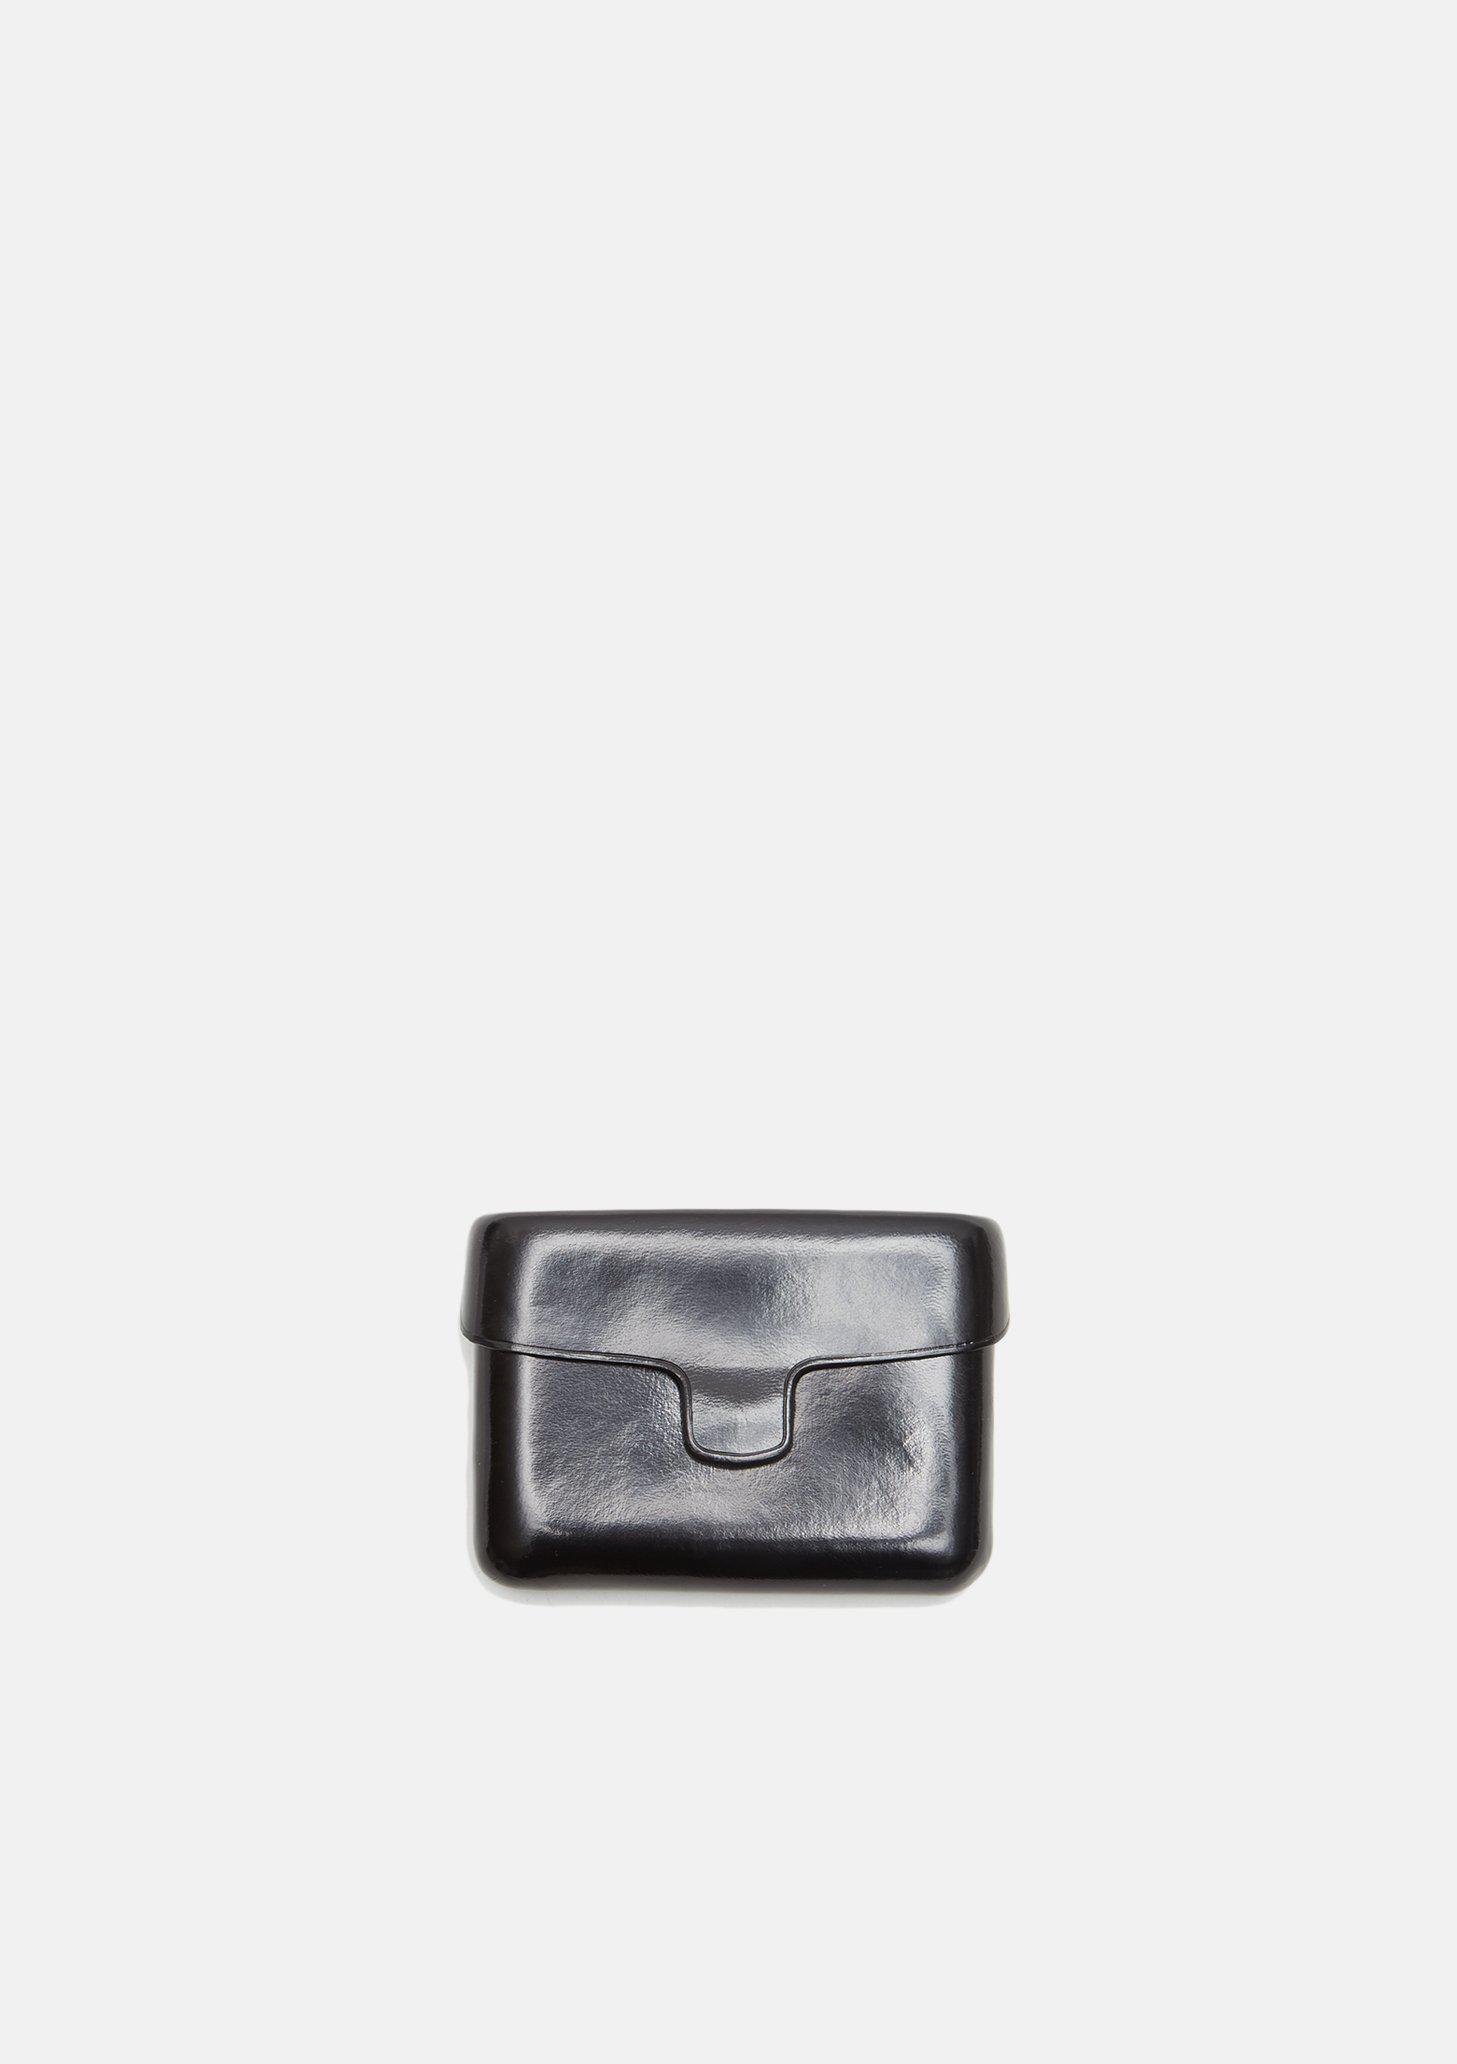 Envelope-shaped Wallet in Black Color - LEMAIRE - Lemaire-USA